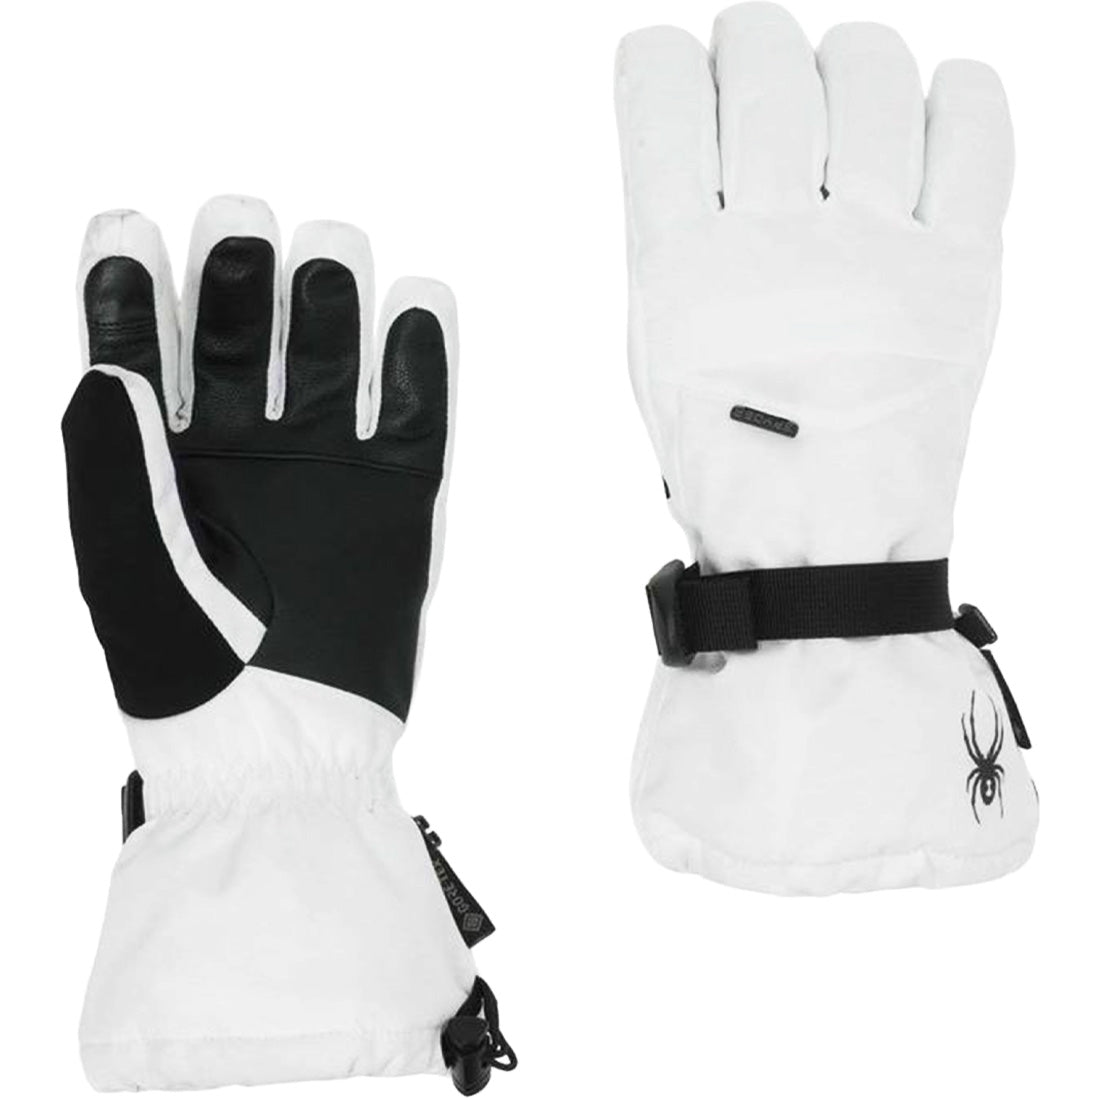 Spyder Synthesis GTX Glove (Past Season) - Women's